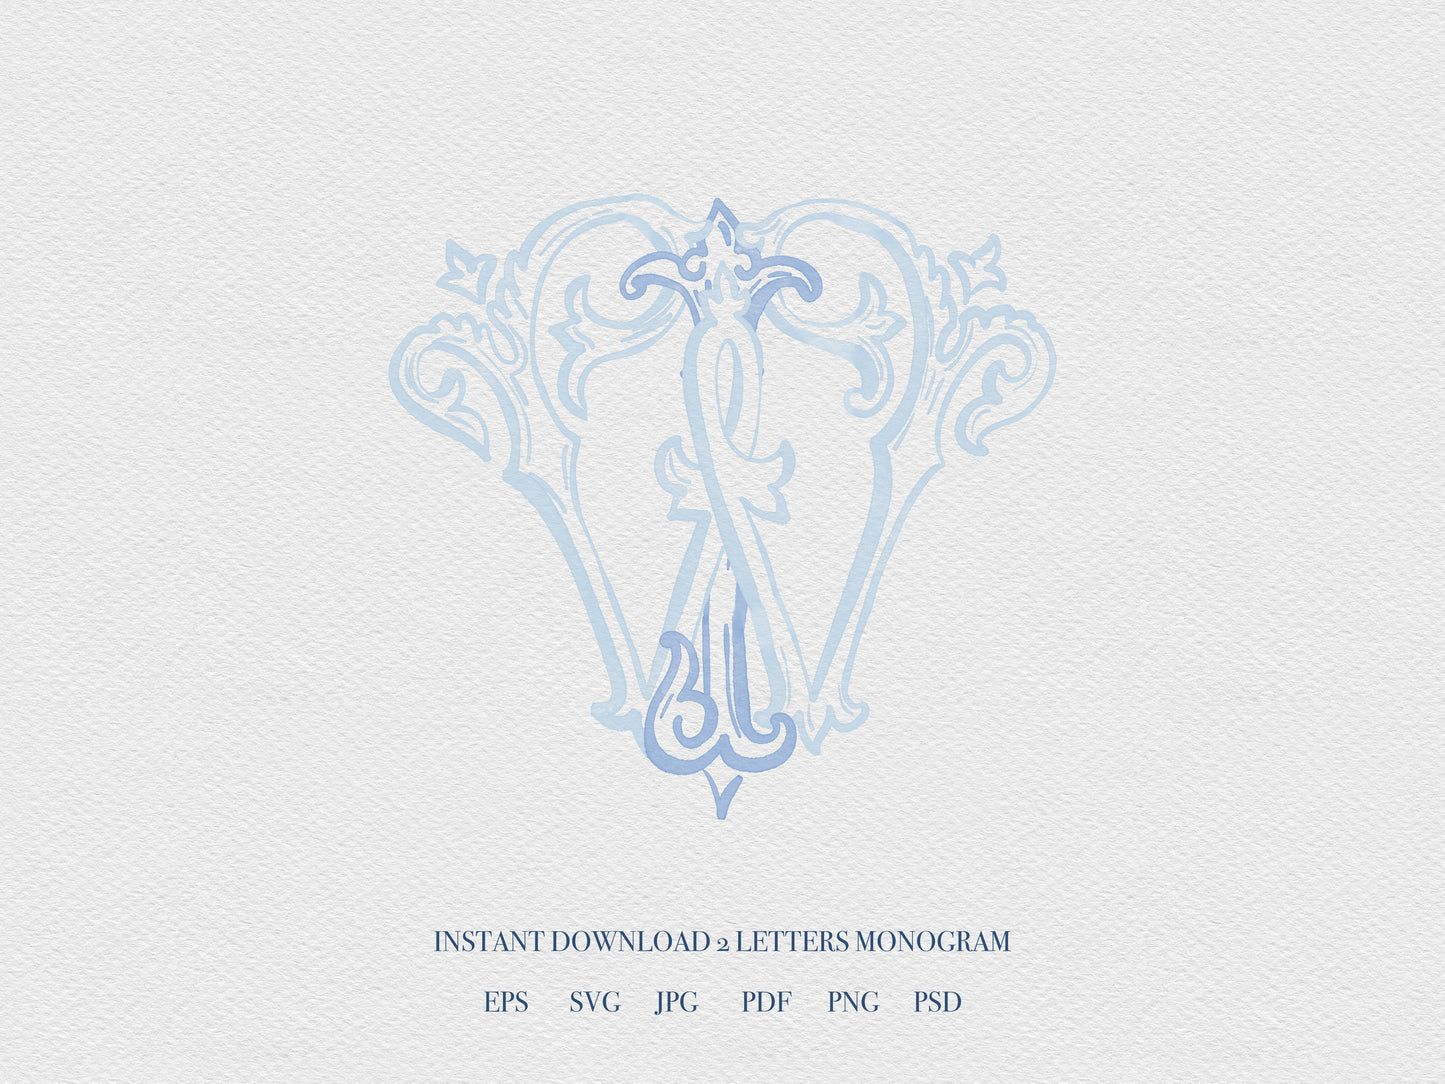 2 Letter Monogram with Letters IW WI | Digital Download - Wedding Monogram SVG, Personal Logo, Wedding Logo for Wedding Invitations The Wedding Crest Lab